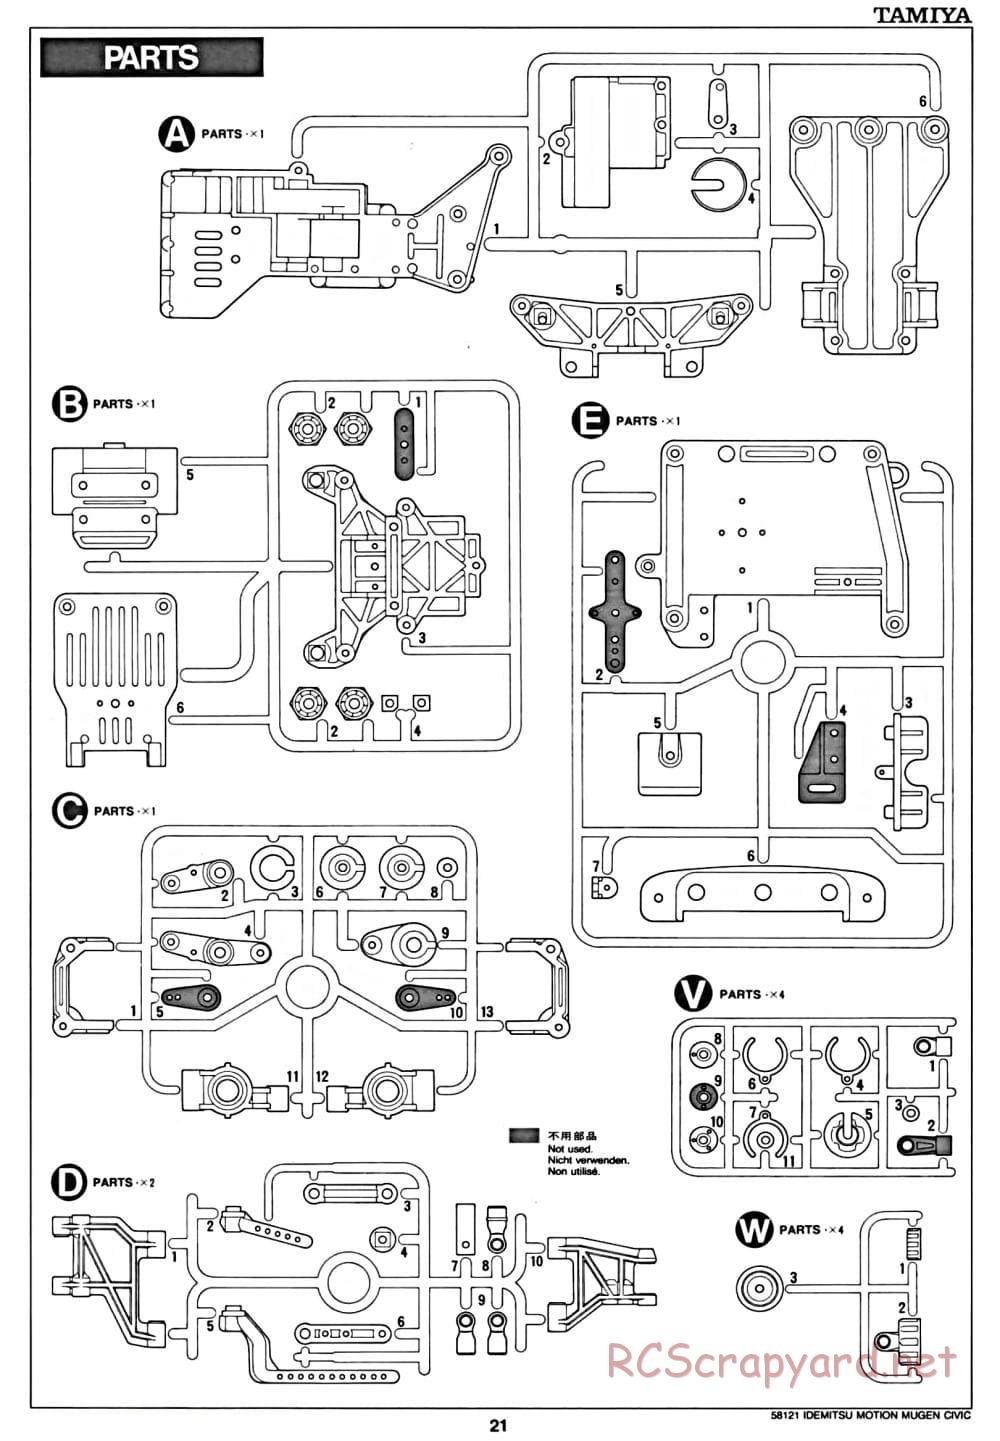 Tamiya - Idemitsu Motion Mugen Civic - FF-01 Chassis - Manual - Page 21